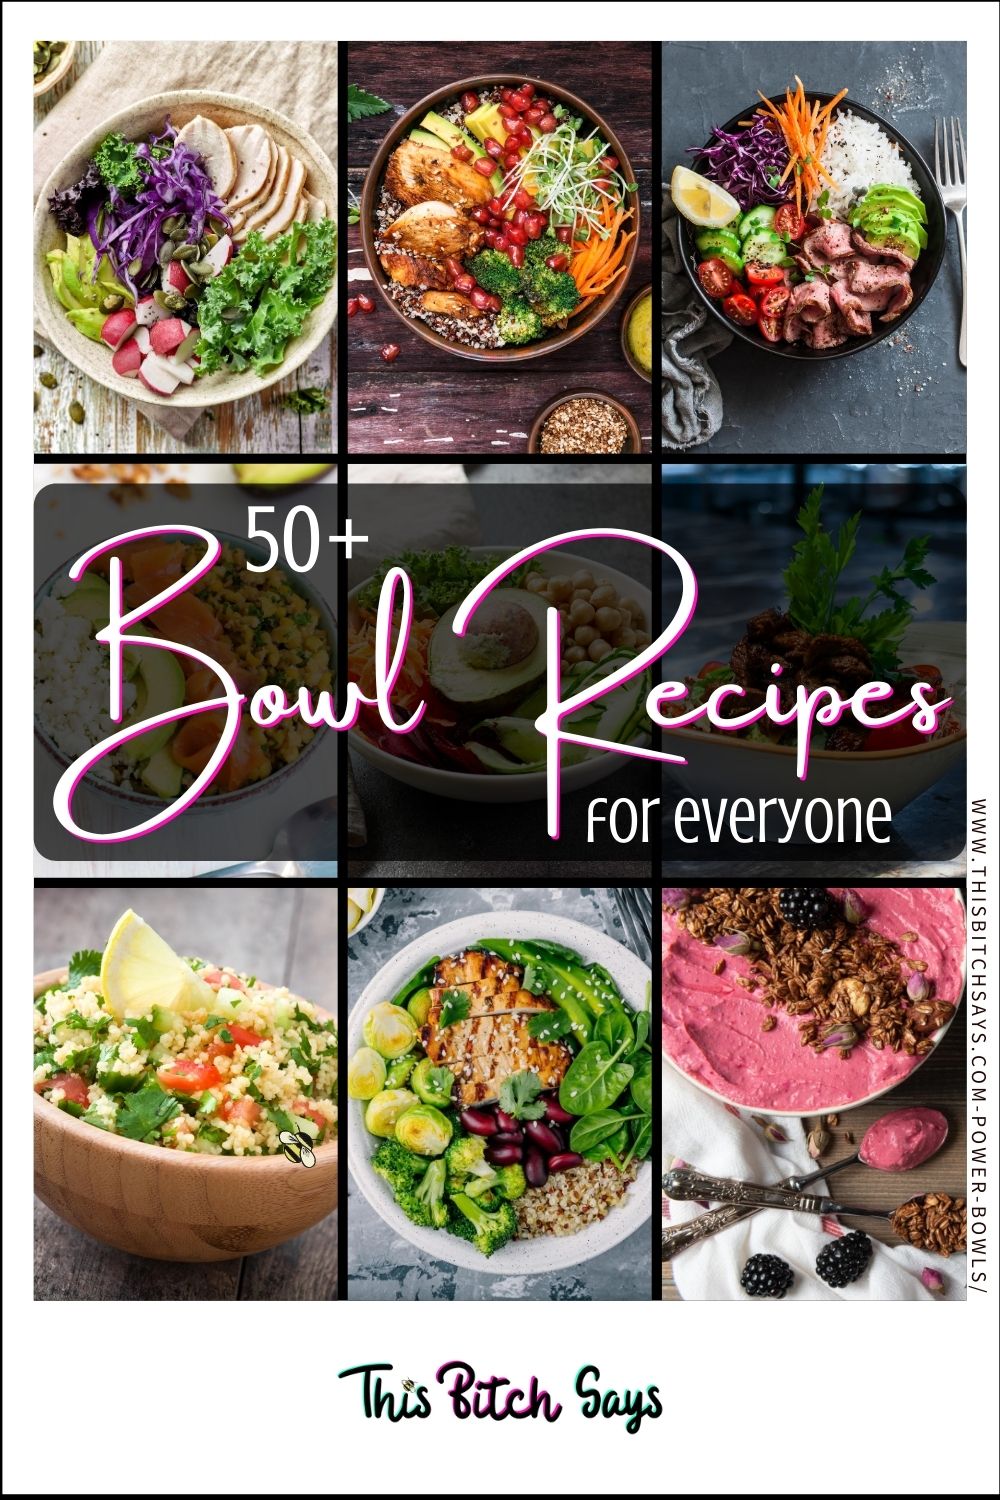 CLICK FOR: 50+ bowl recipes for everyone